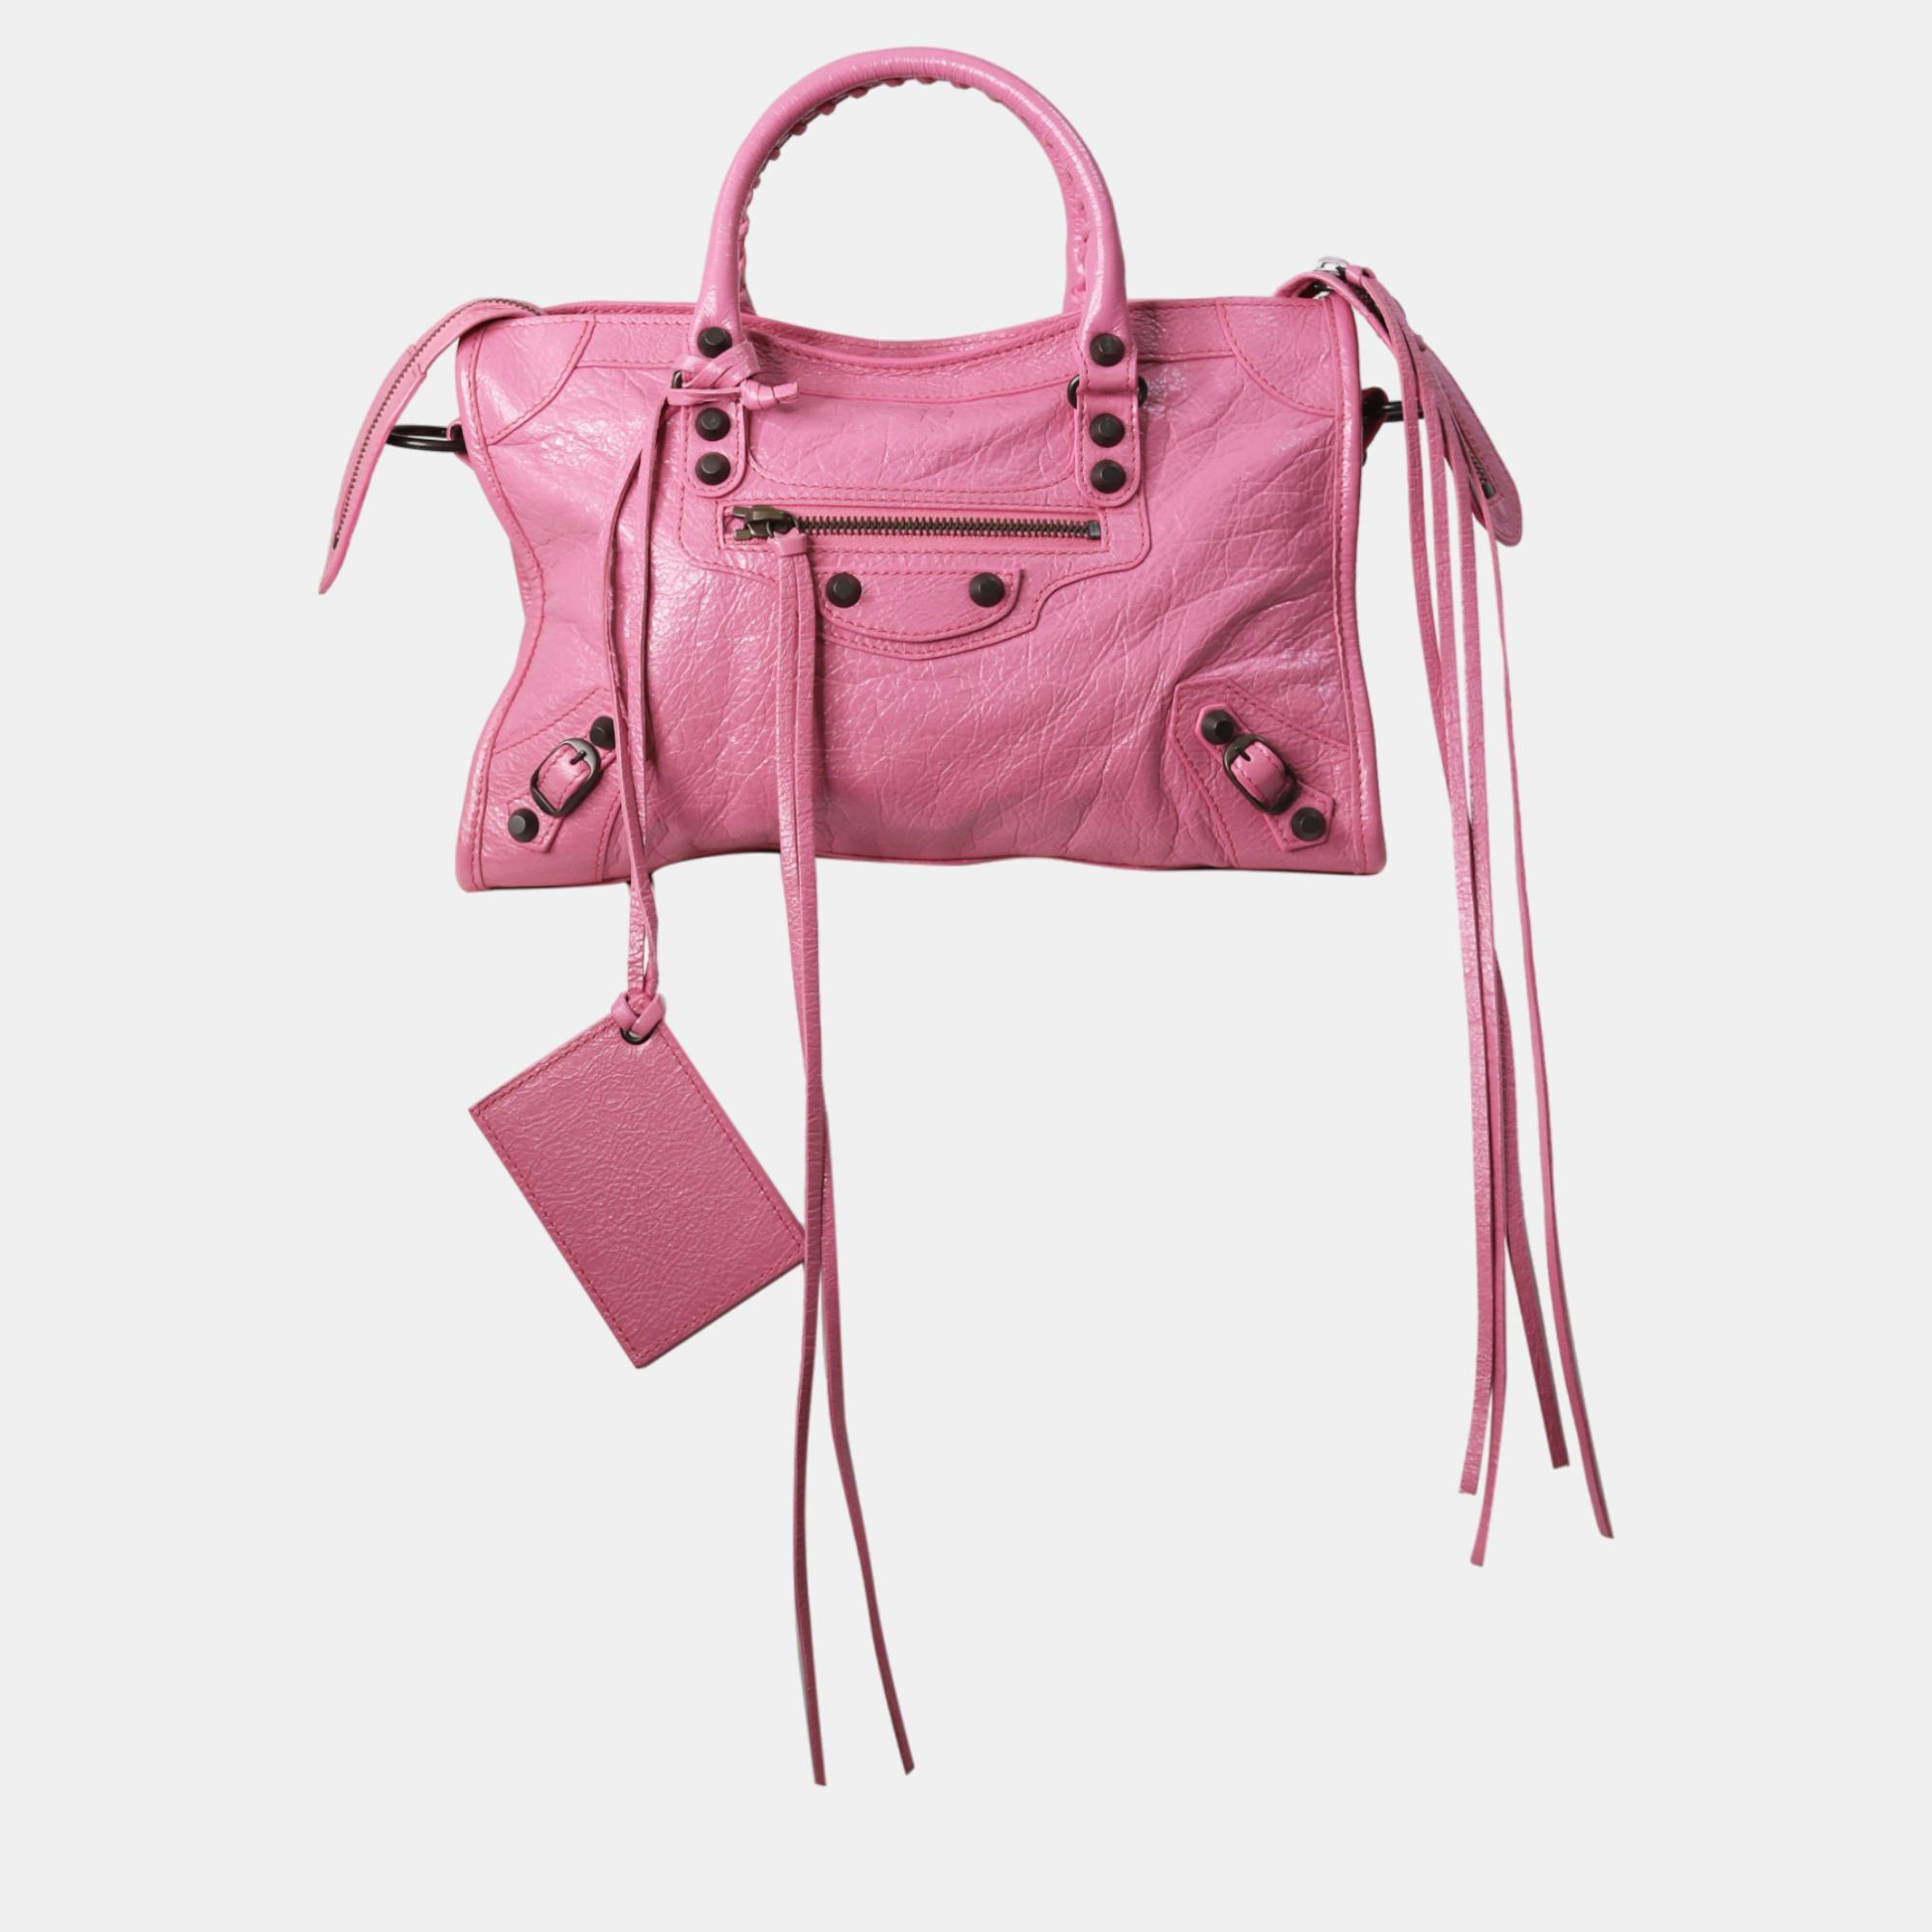 Balenciaga pink leather city bag